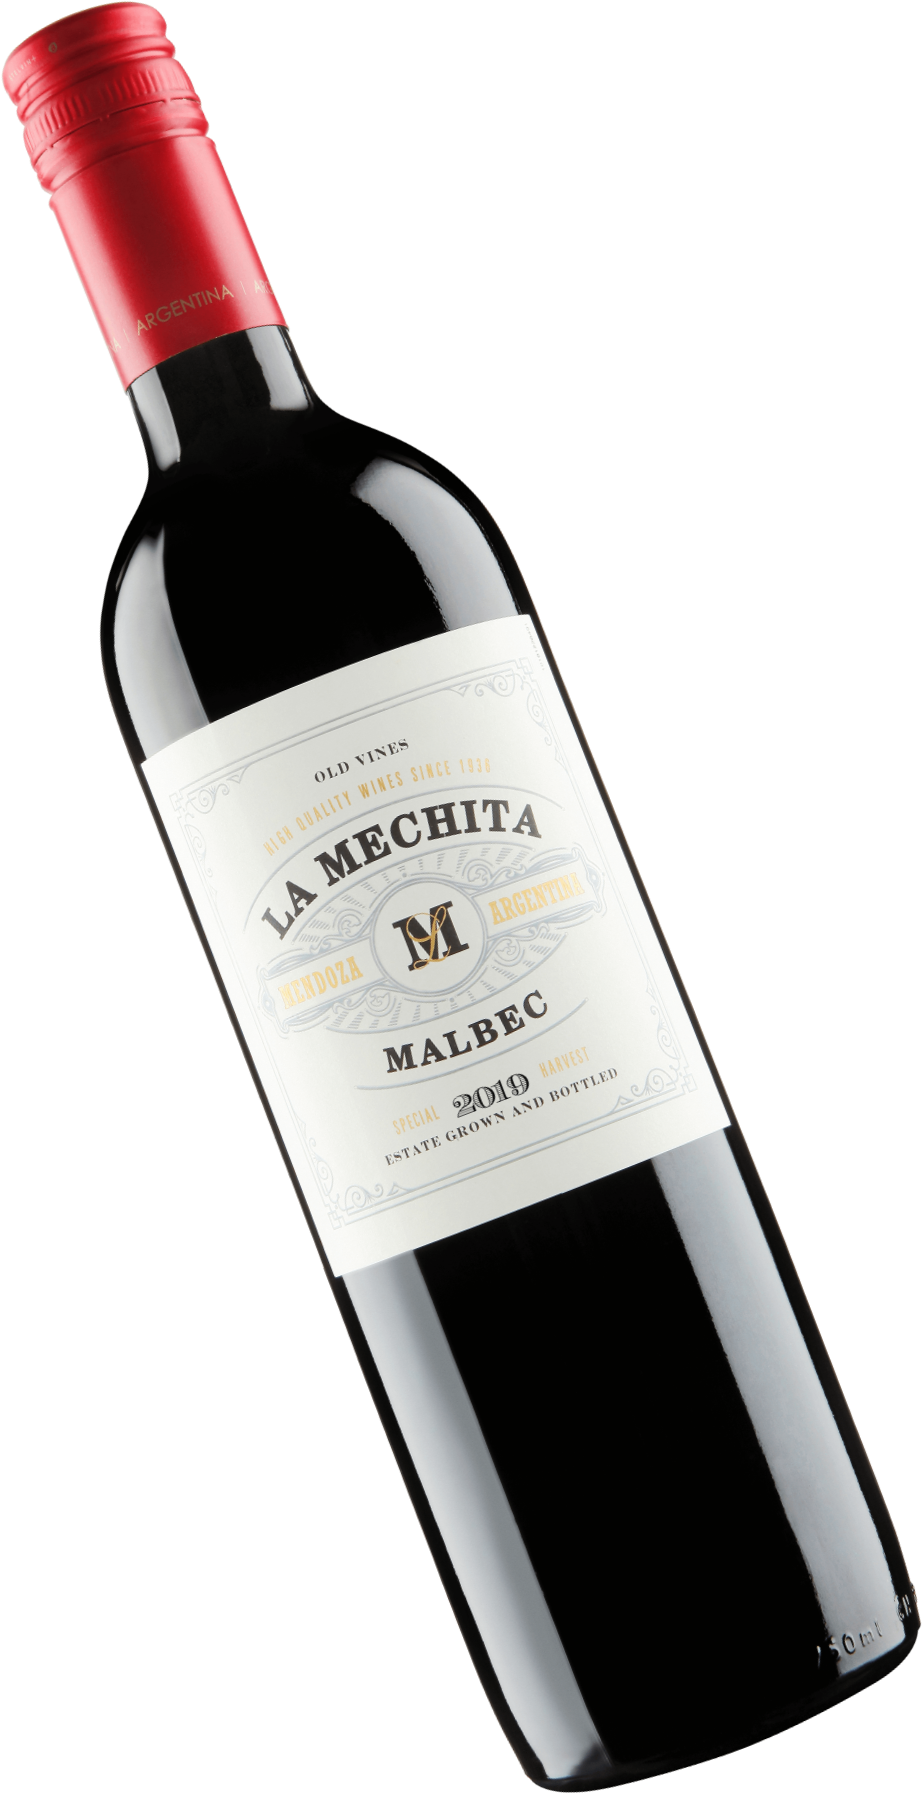 Bottle of La Mechita Malbec